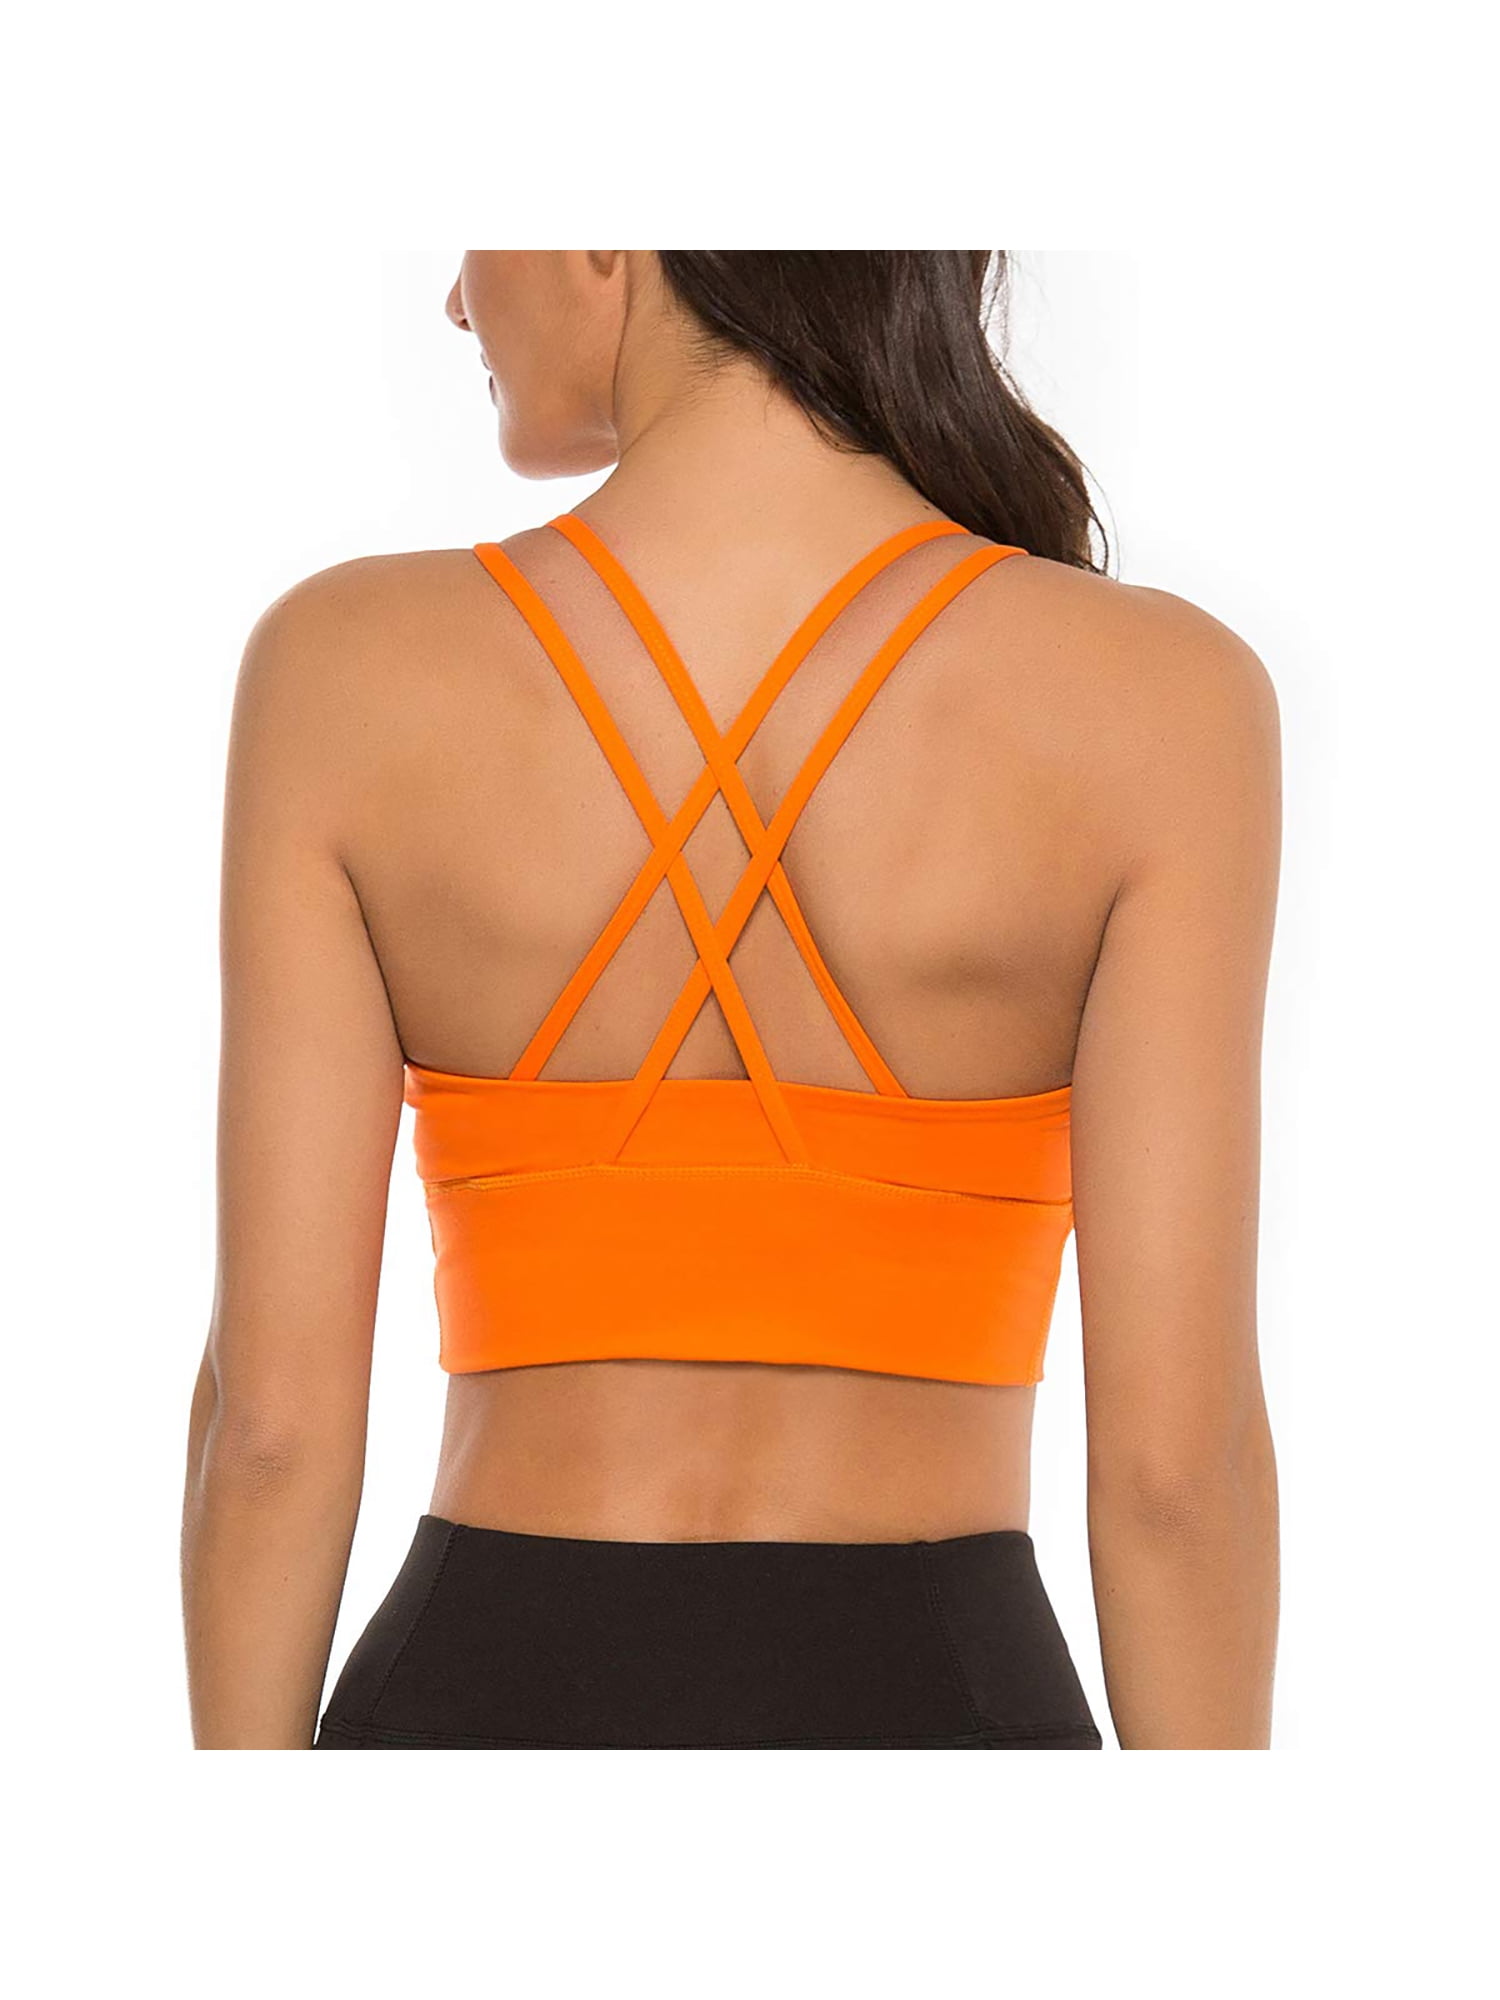 Core Strappy Sports Bra (Bright Orange) by OneMoreRep - Nutrition Warehouse